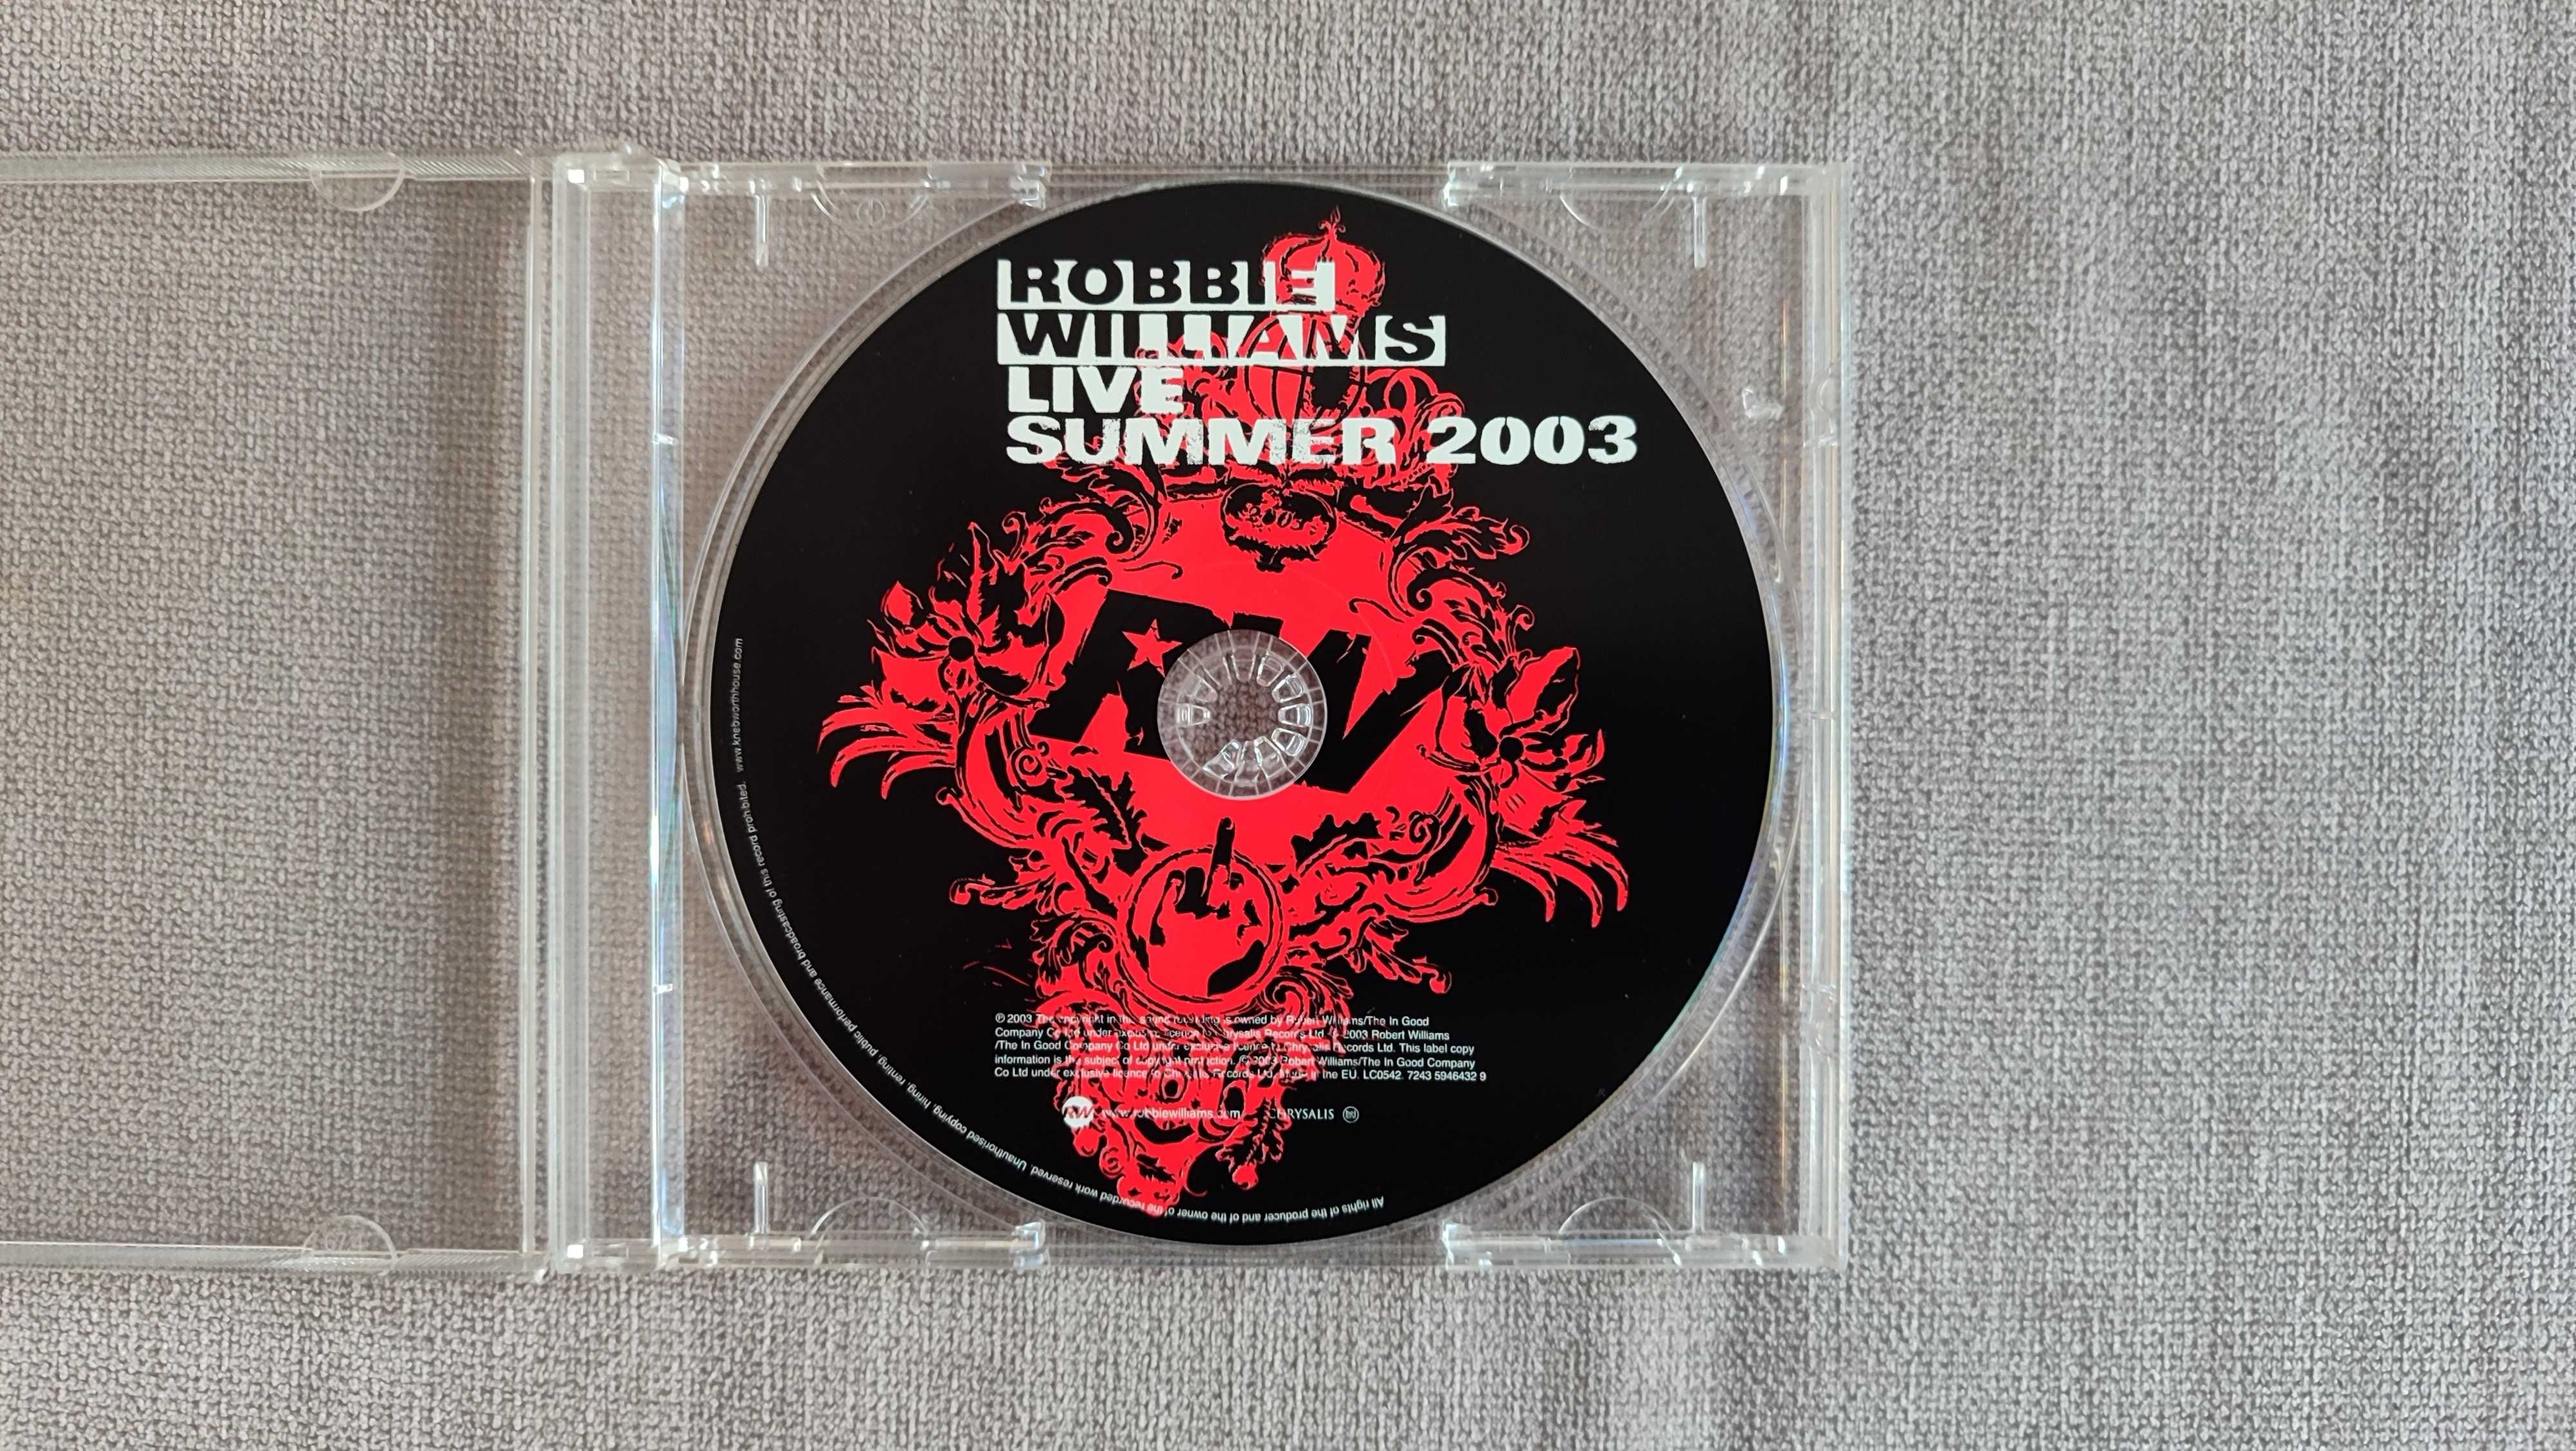 Robbie Williams | Live Summer 2003 (CD)